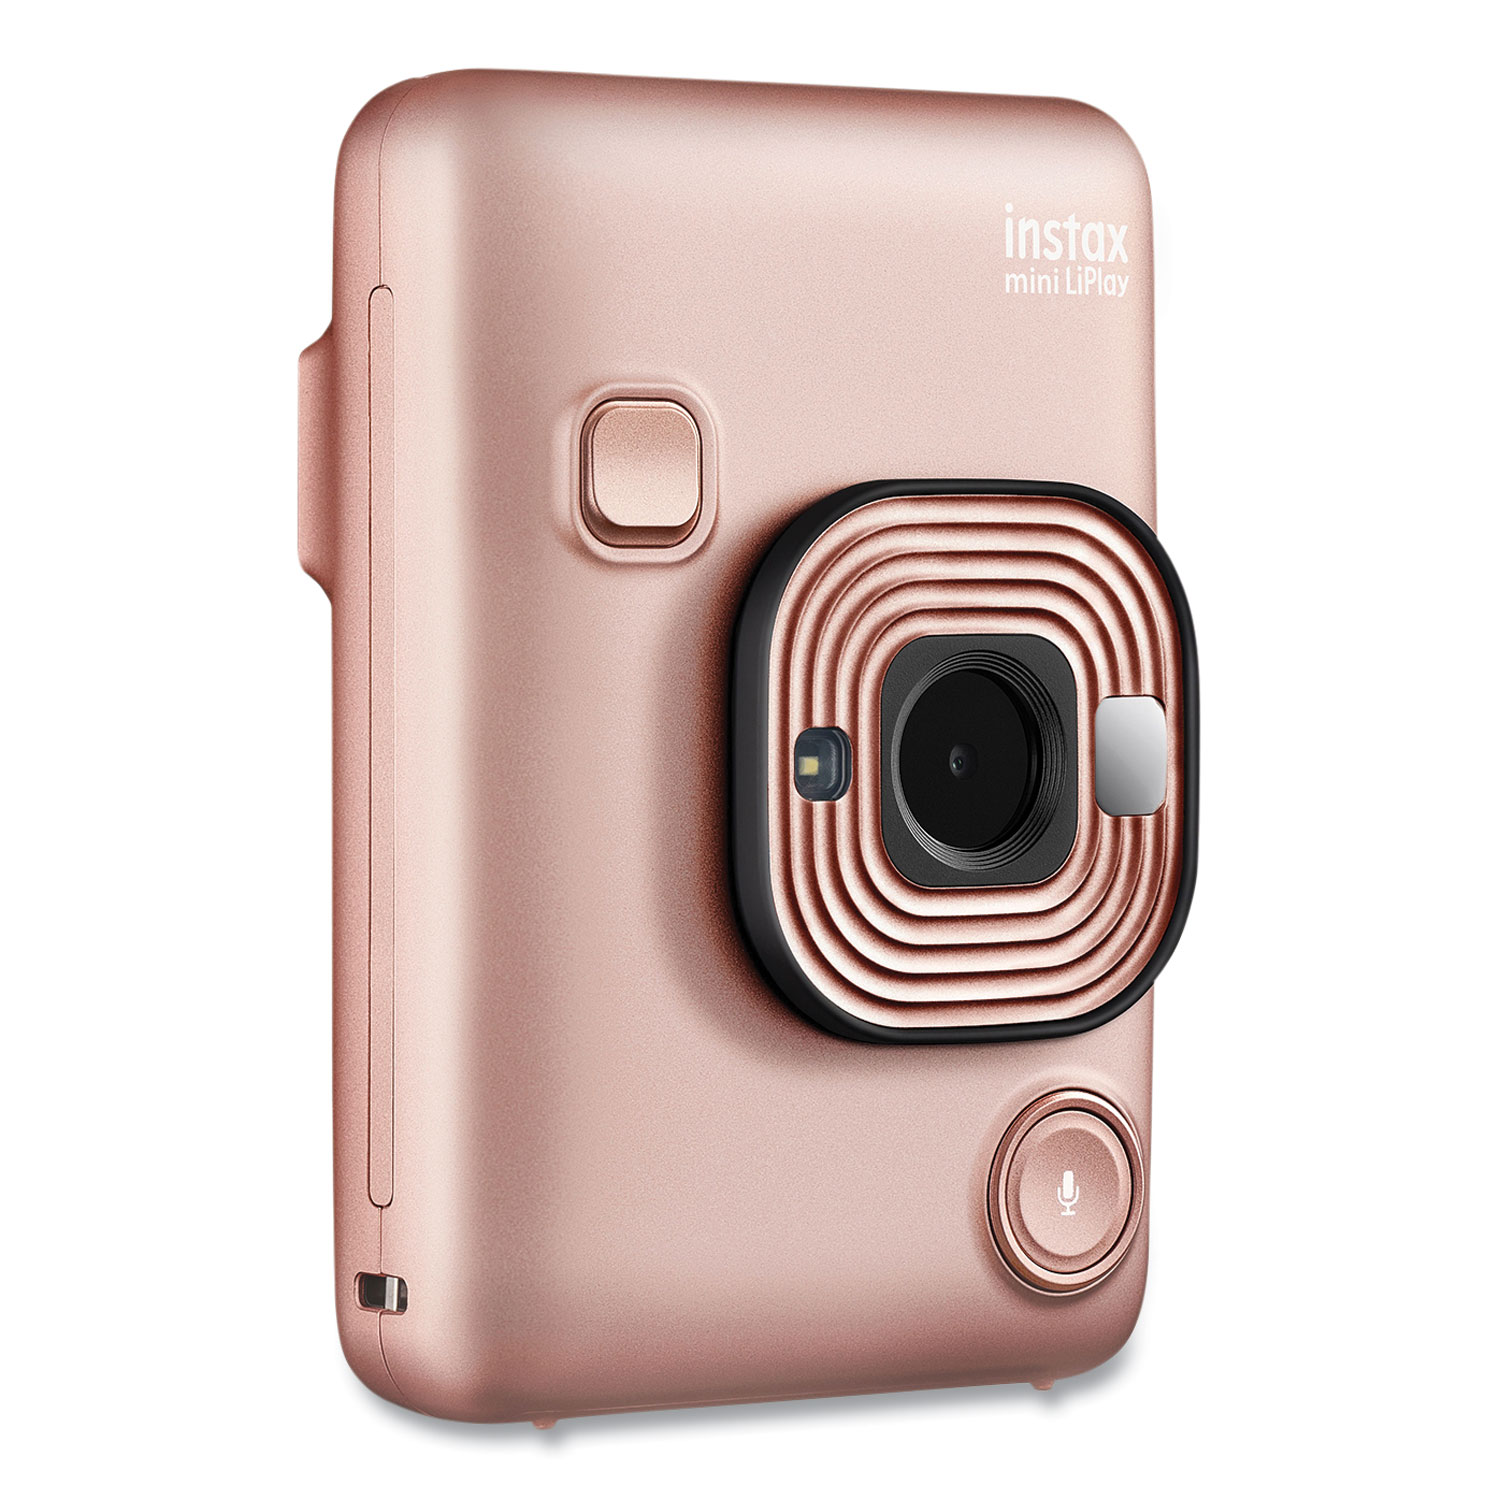 Fujifilm Instax Mini LiPlay Instant Camera, Blush Gold